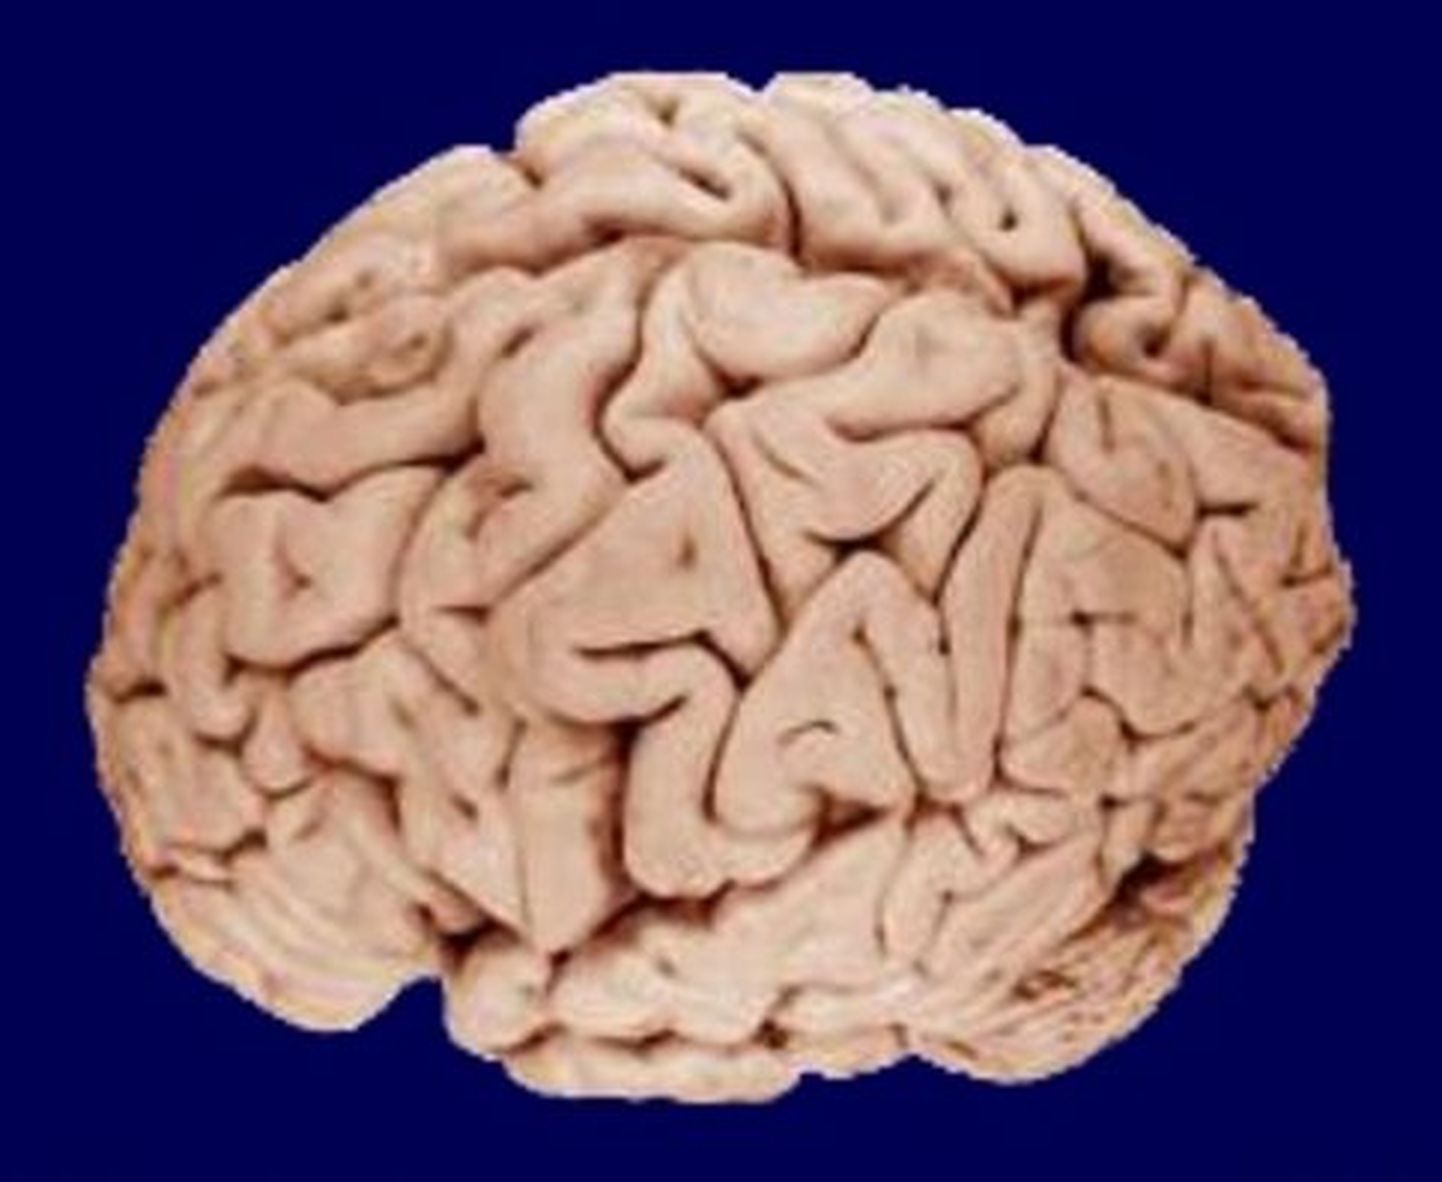 Мозг человека.